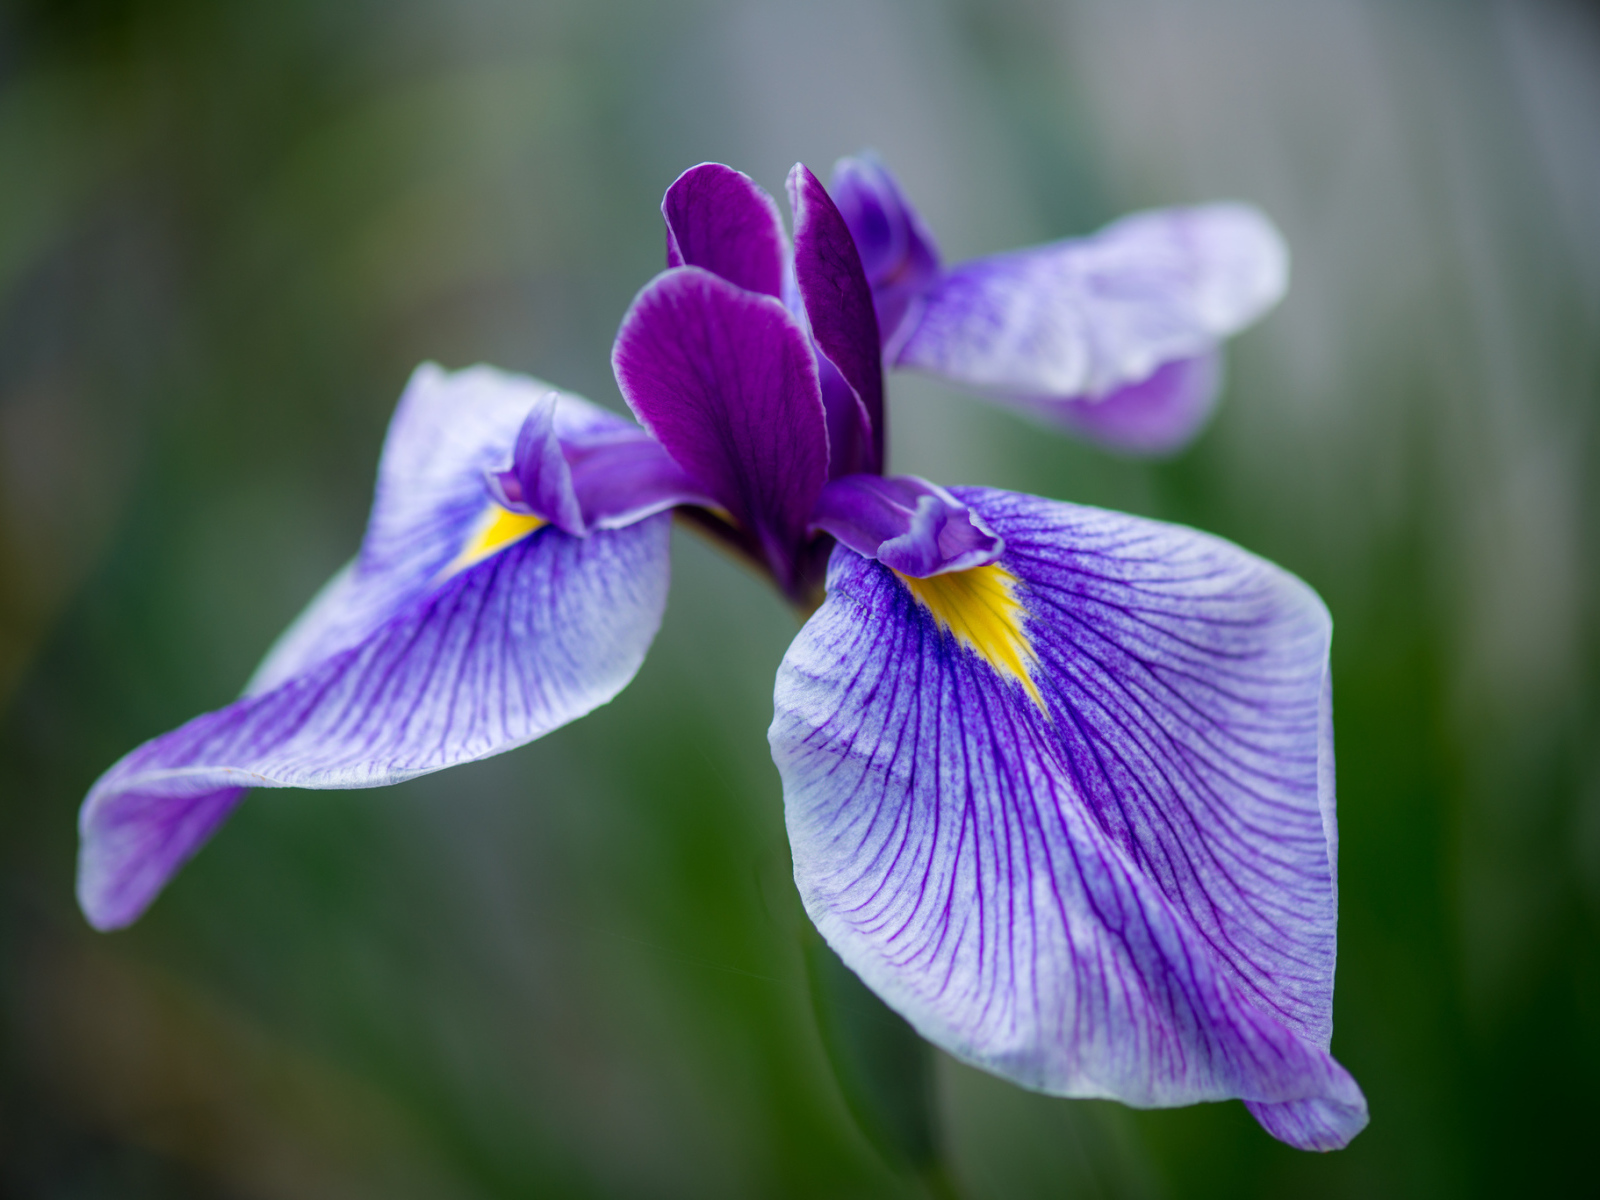 Beautiful flowers in the garden of irises